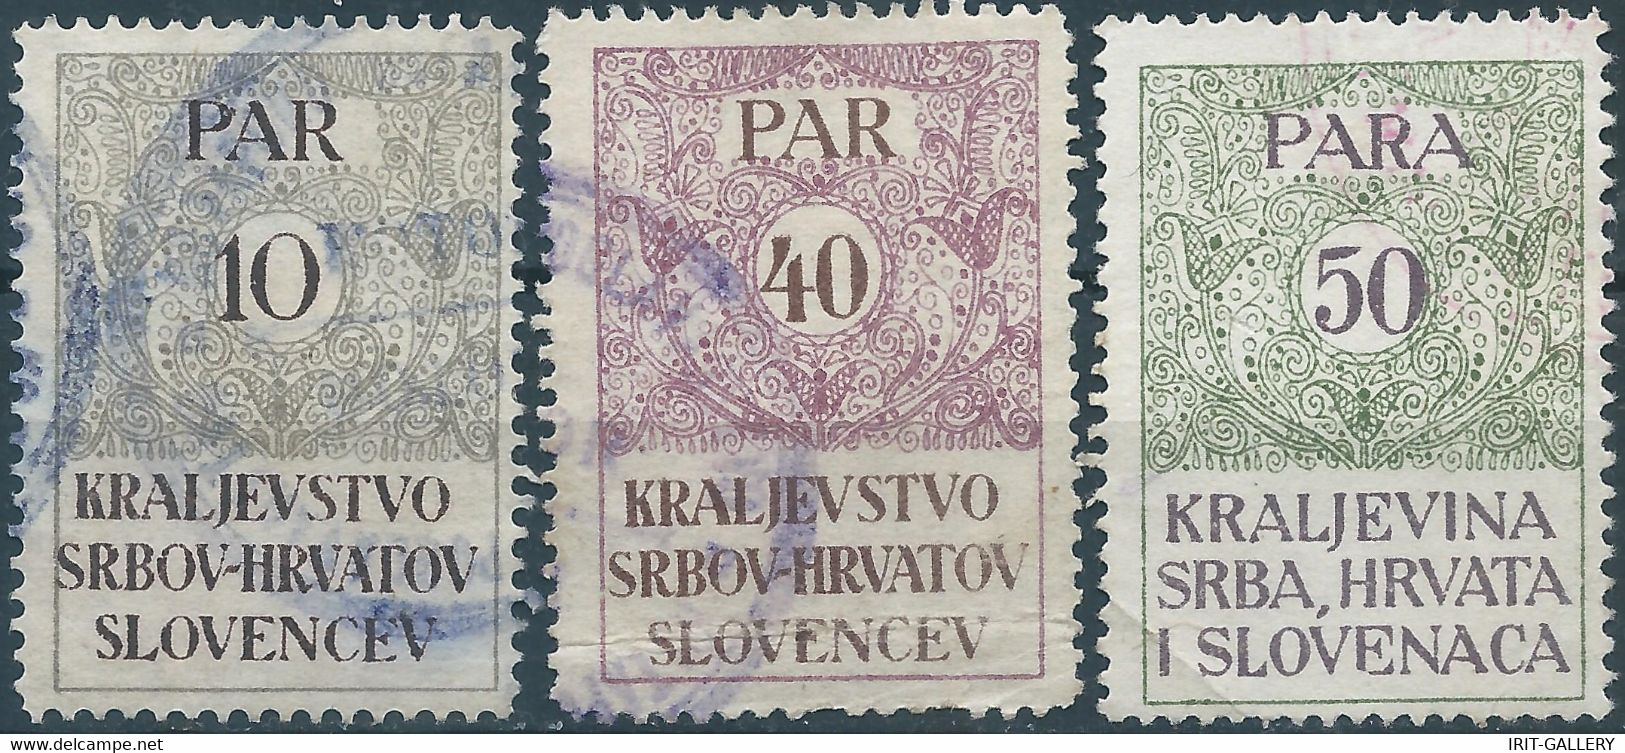 Yugoslavia -Juogoslavia-Croazia-Slovenia-Serbia, Revenue Stamps Fiscal Tax 10-20-50Para, Used - Officials